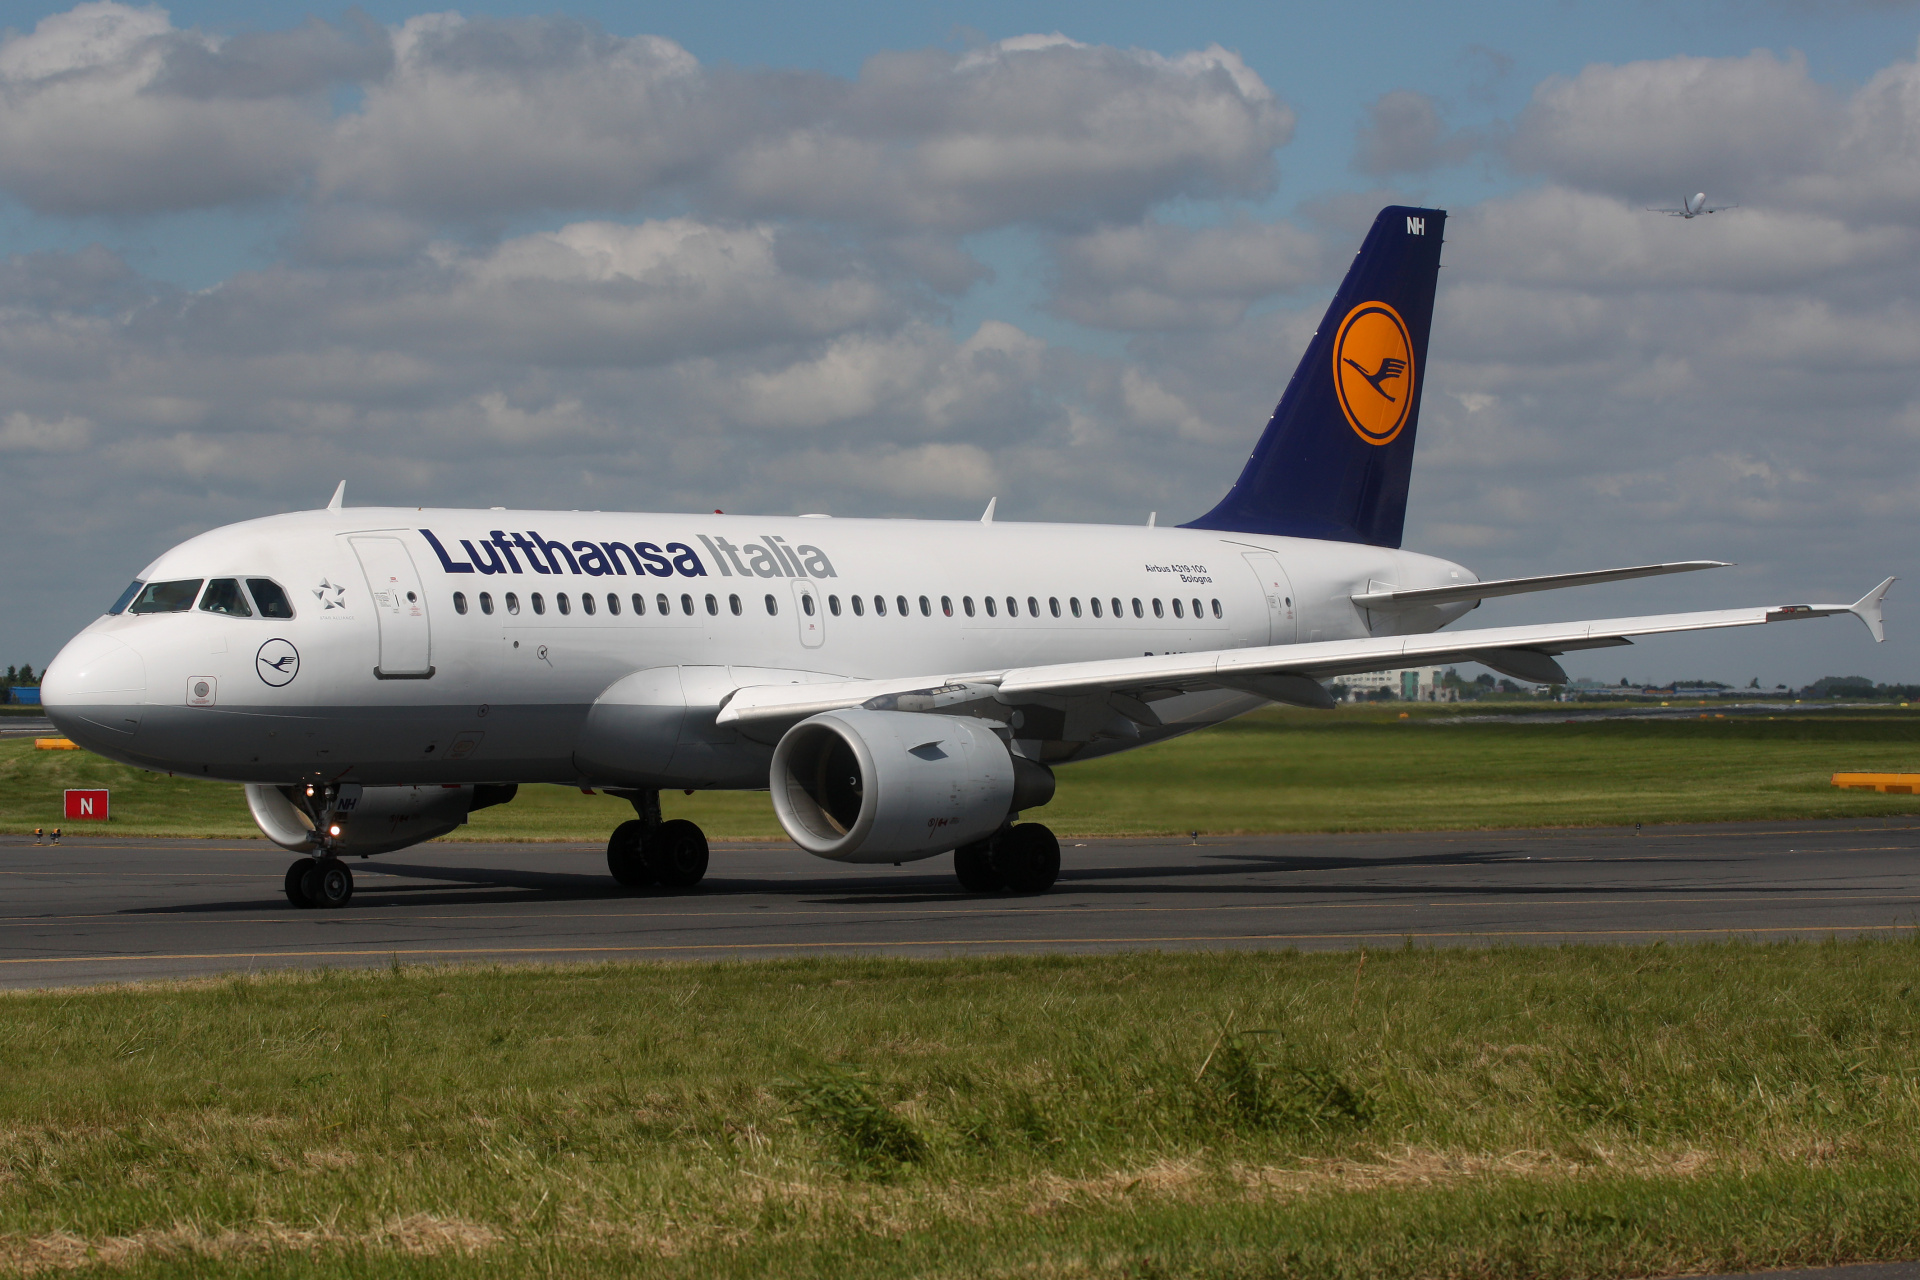 D-AKNH, Lufthansa Italia (Aircraft » EPWA Spotting » Airbus A319-100)